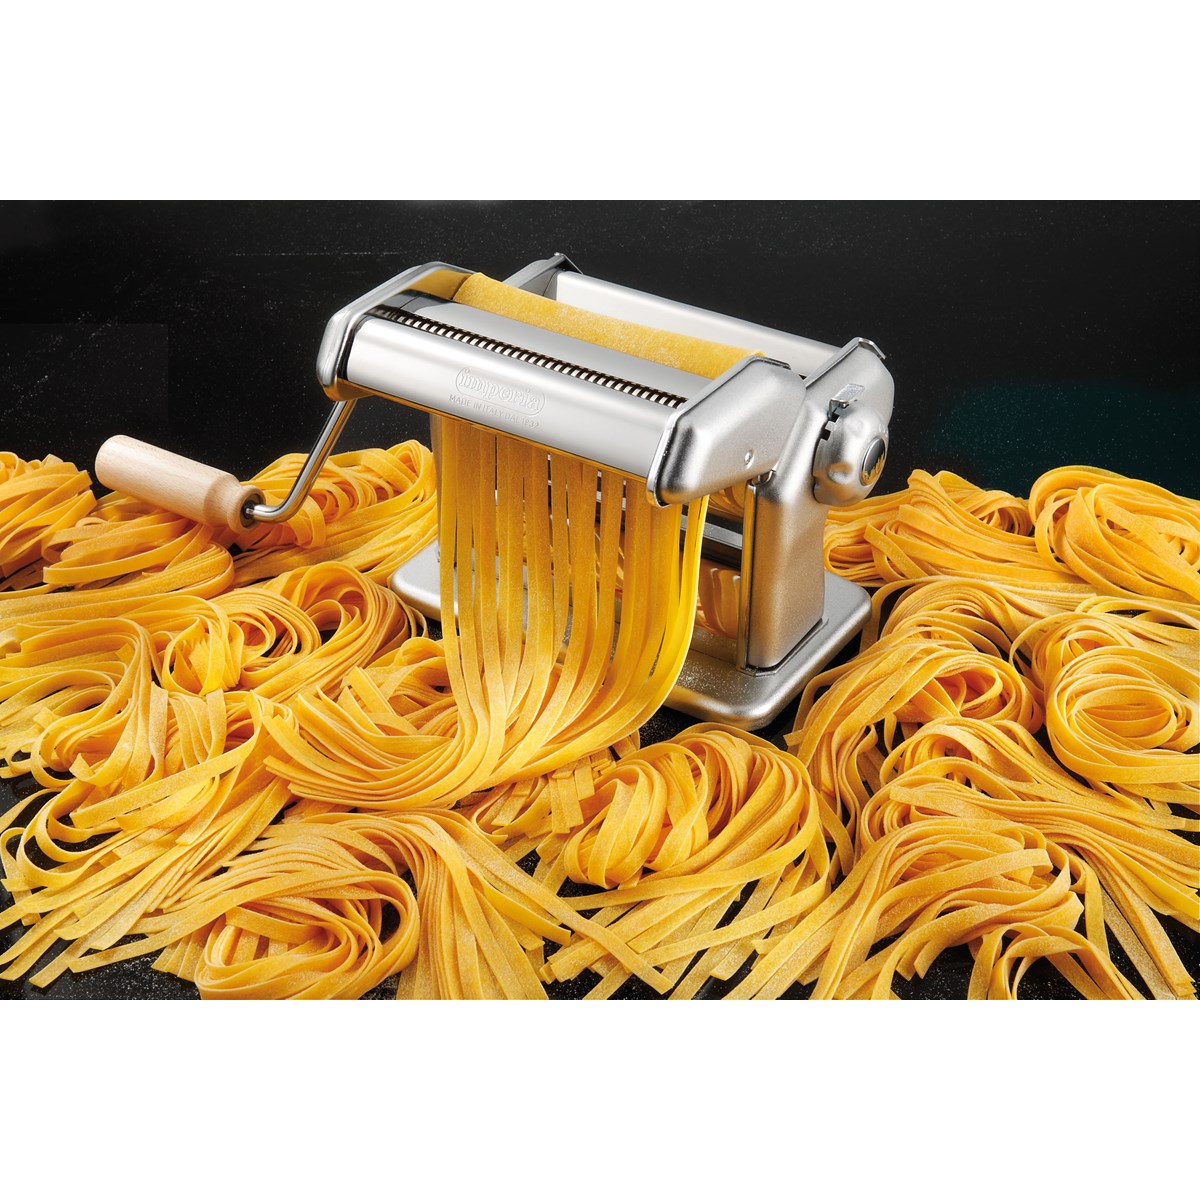 Imperia iPasta Limited Edition pastamaskin 150 mm satin grå